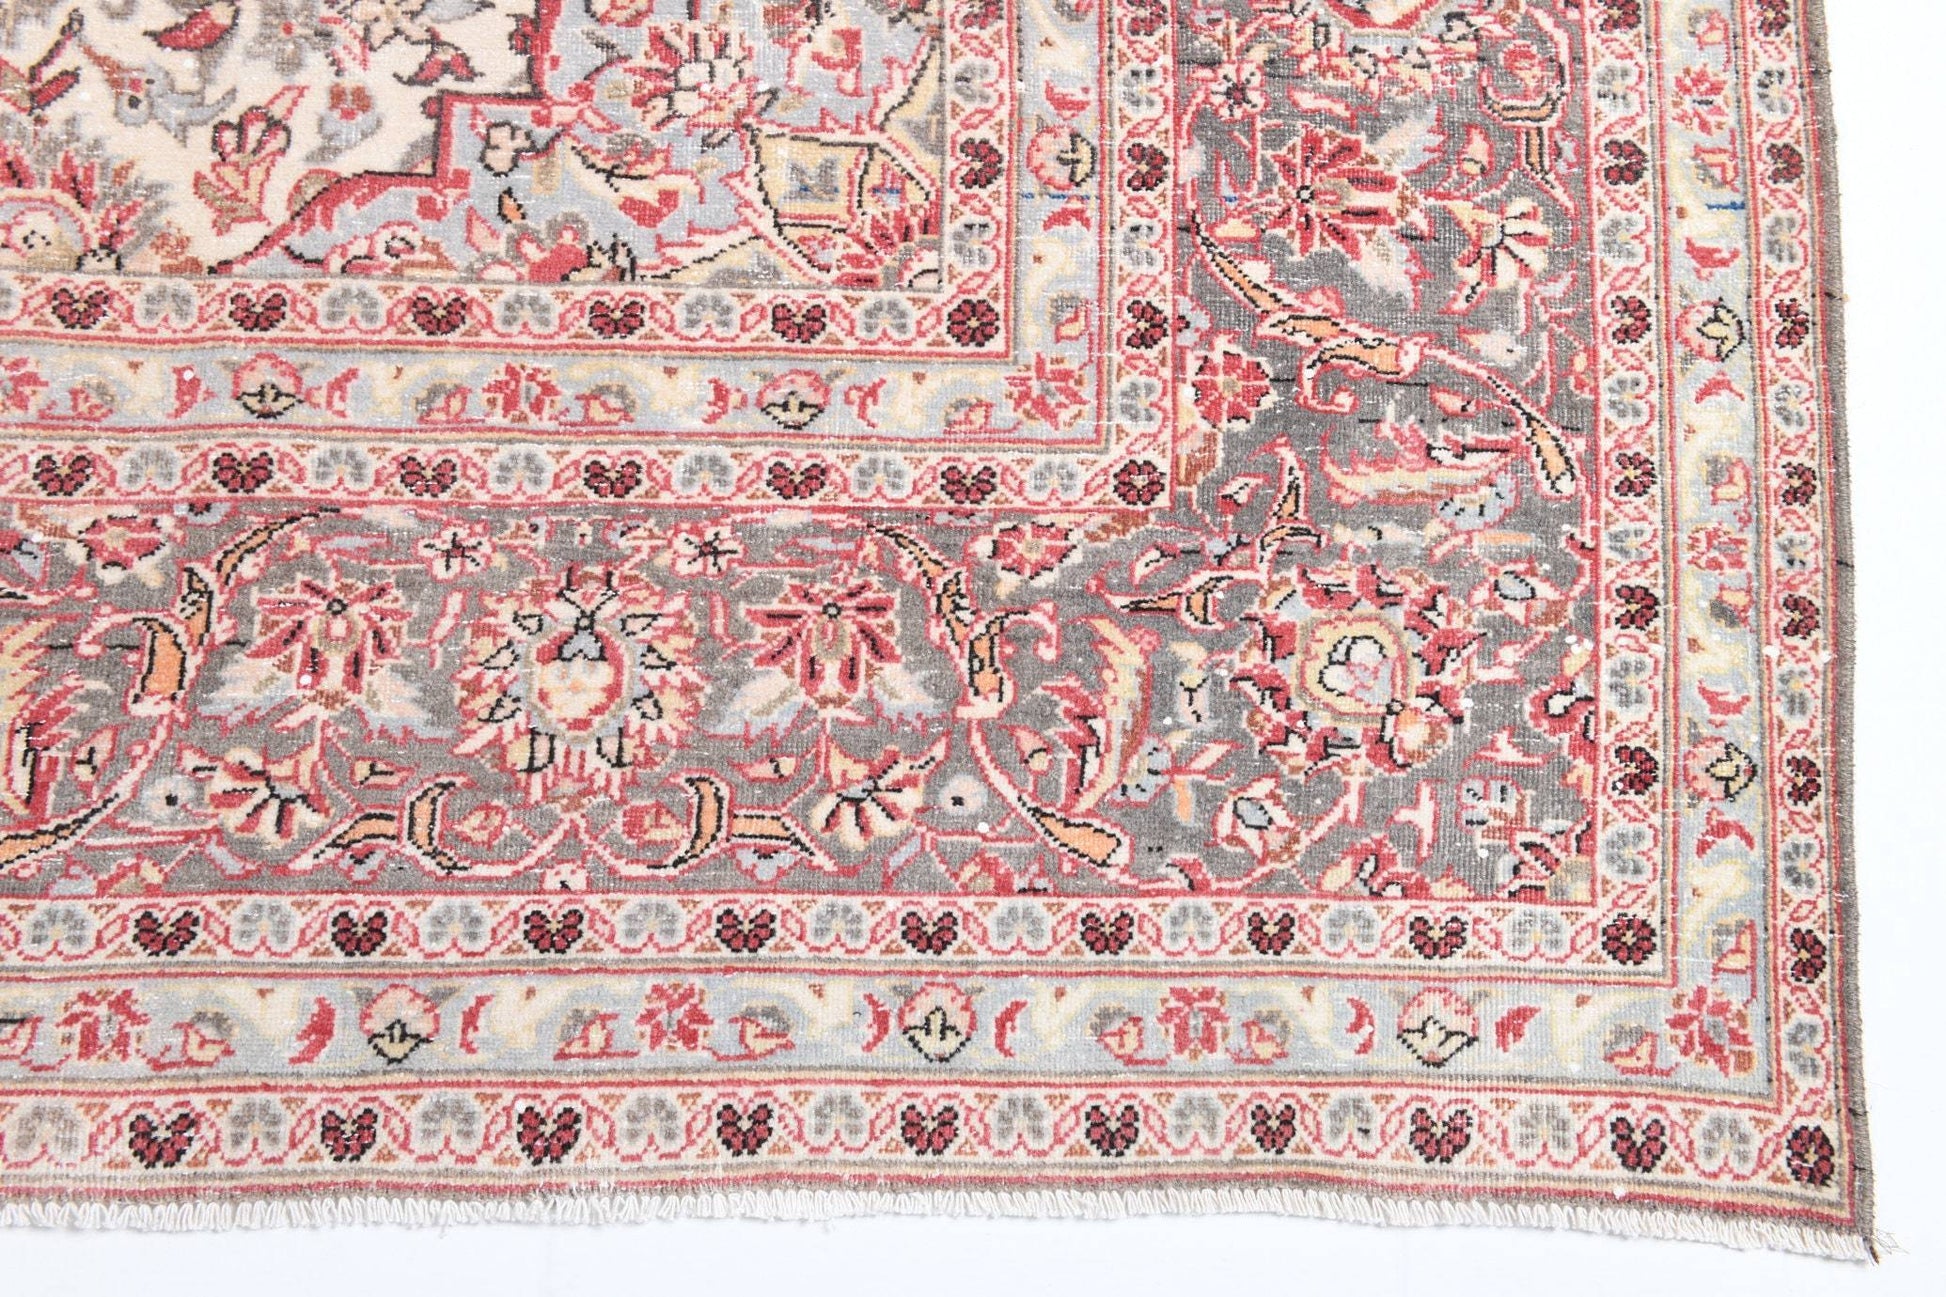 9' x 13' Red Vintage Persian Rug  |  RugReform